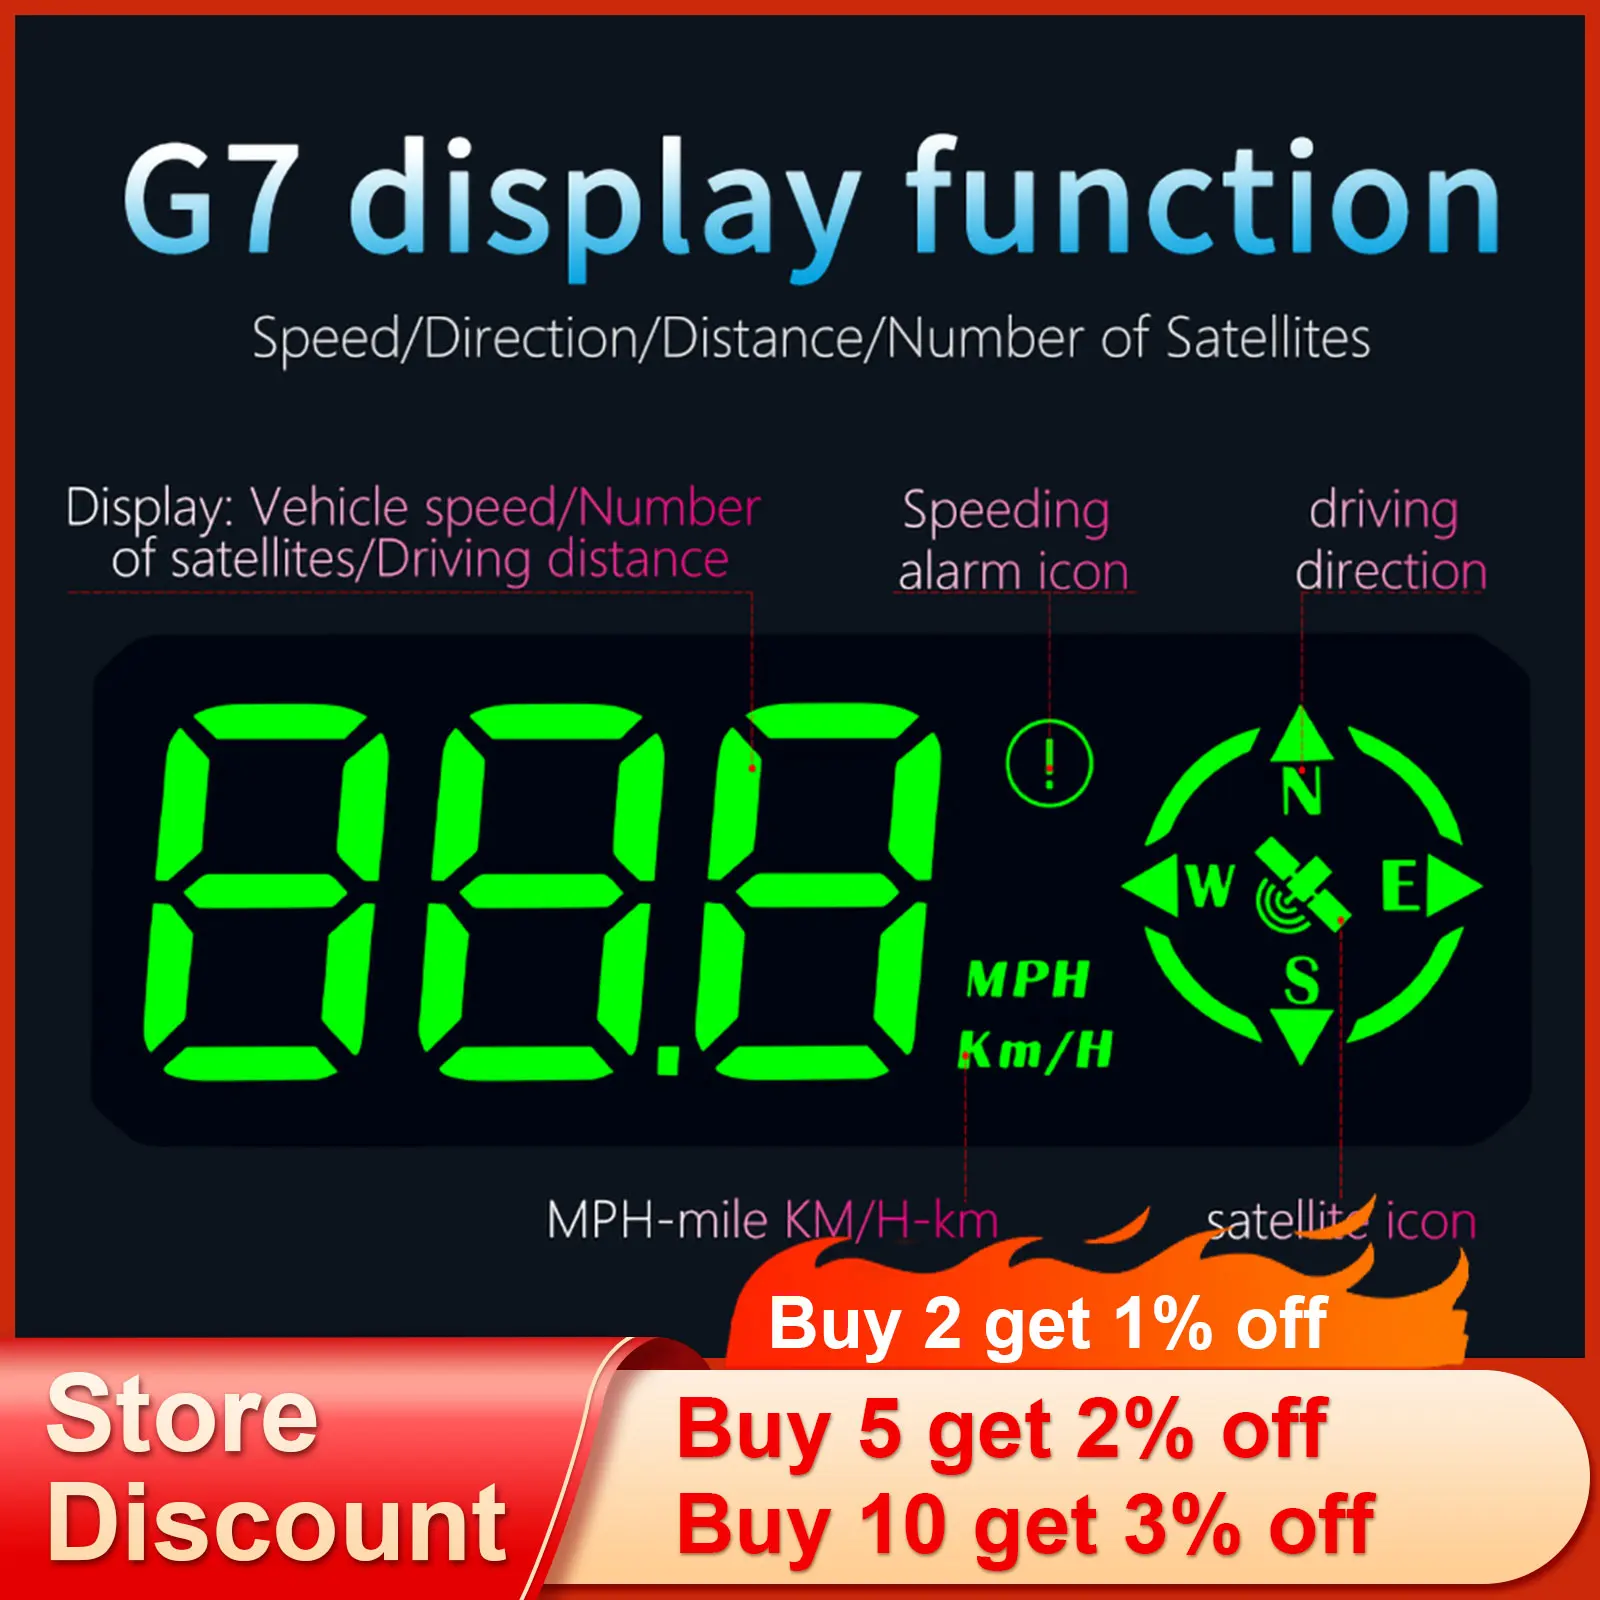 HD G7 GPS מד מהירות מצפן Head-Up Display מטר האד מהירות הנסיעה כיוון נהיגה מעל למהירות אזעקה עייפות בנהיגה תזכיר לי - 1